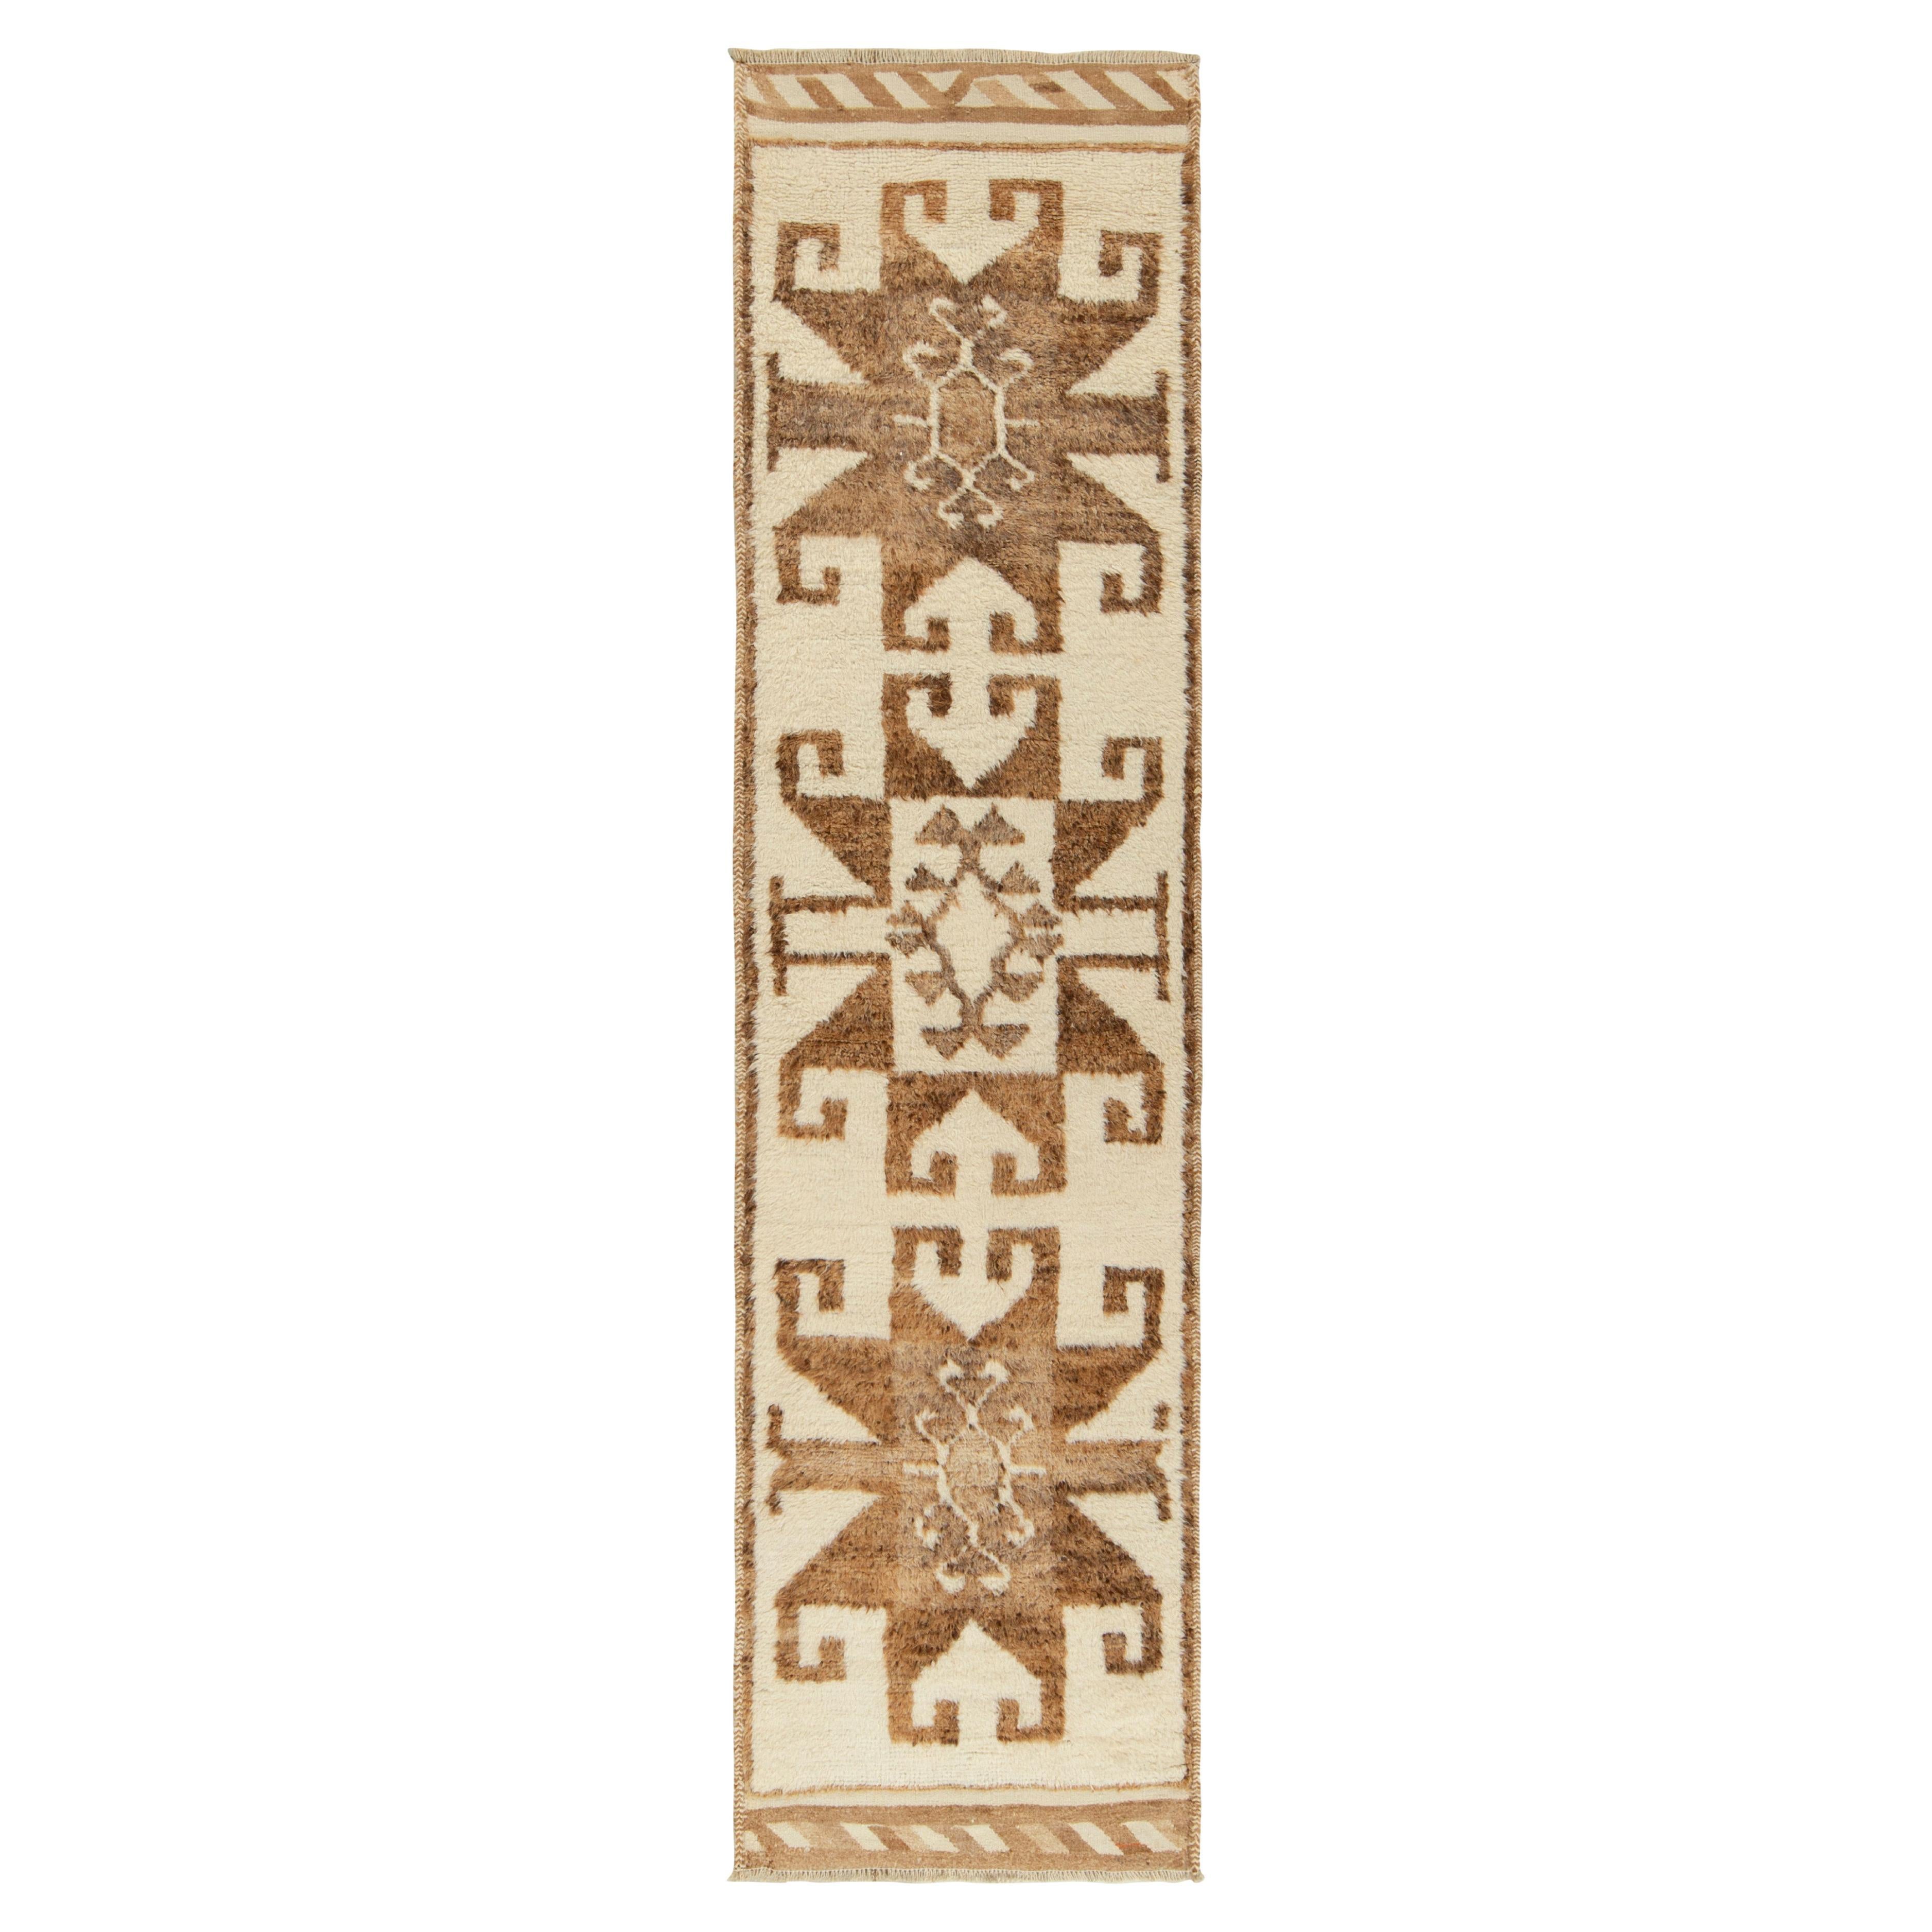 Vintage Tribal Runner in Beige-Brown Geometric Patterns, Style by Rug & Kilim For Sale